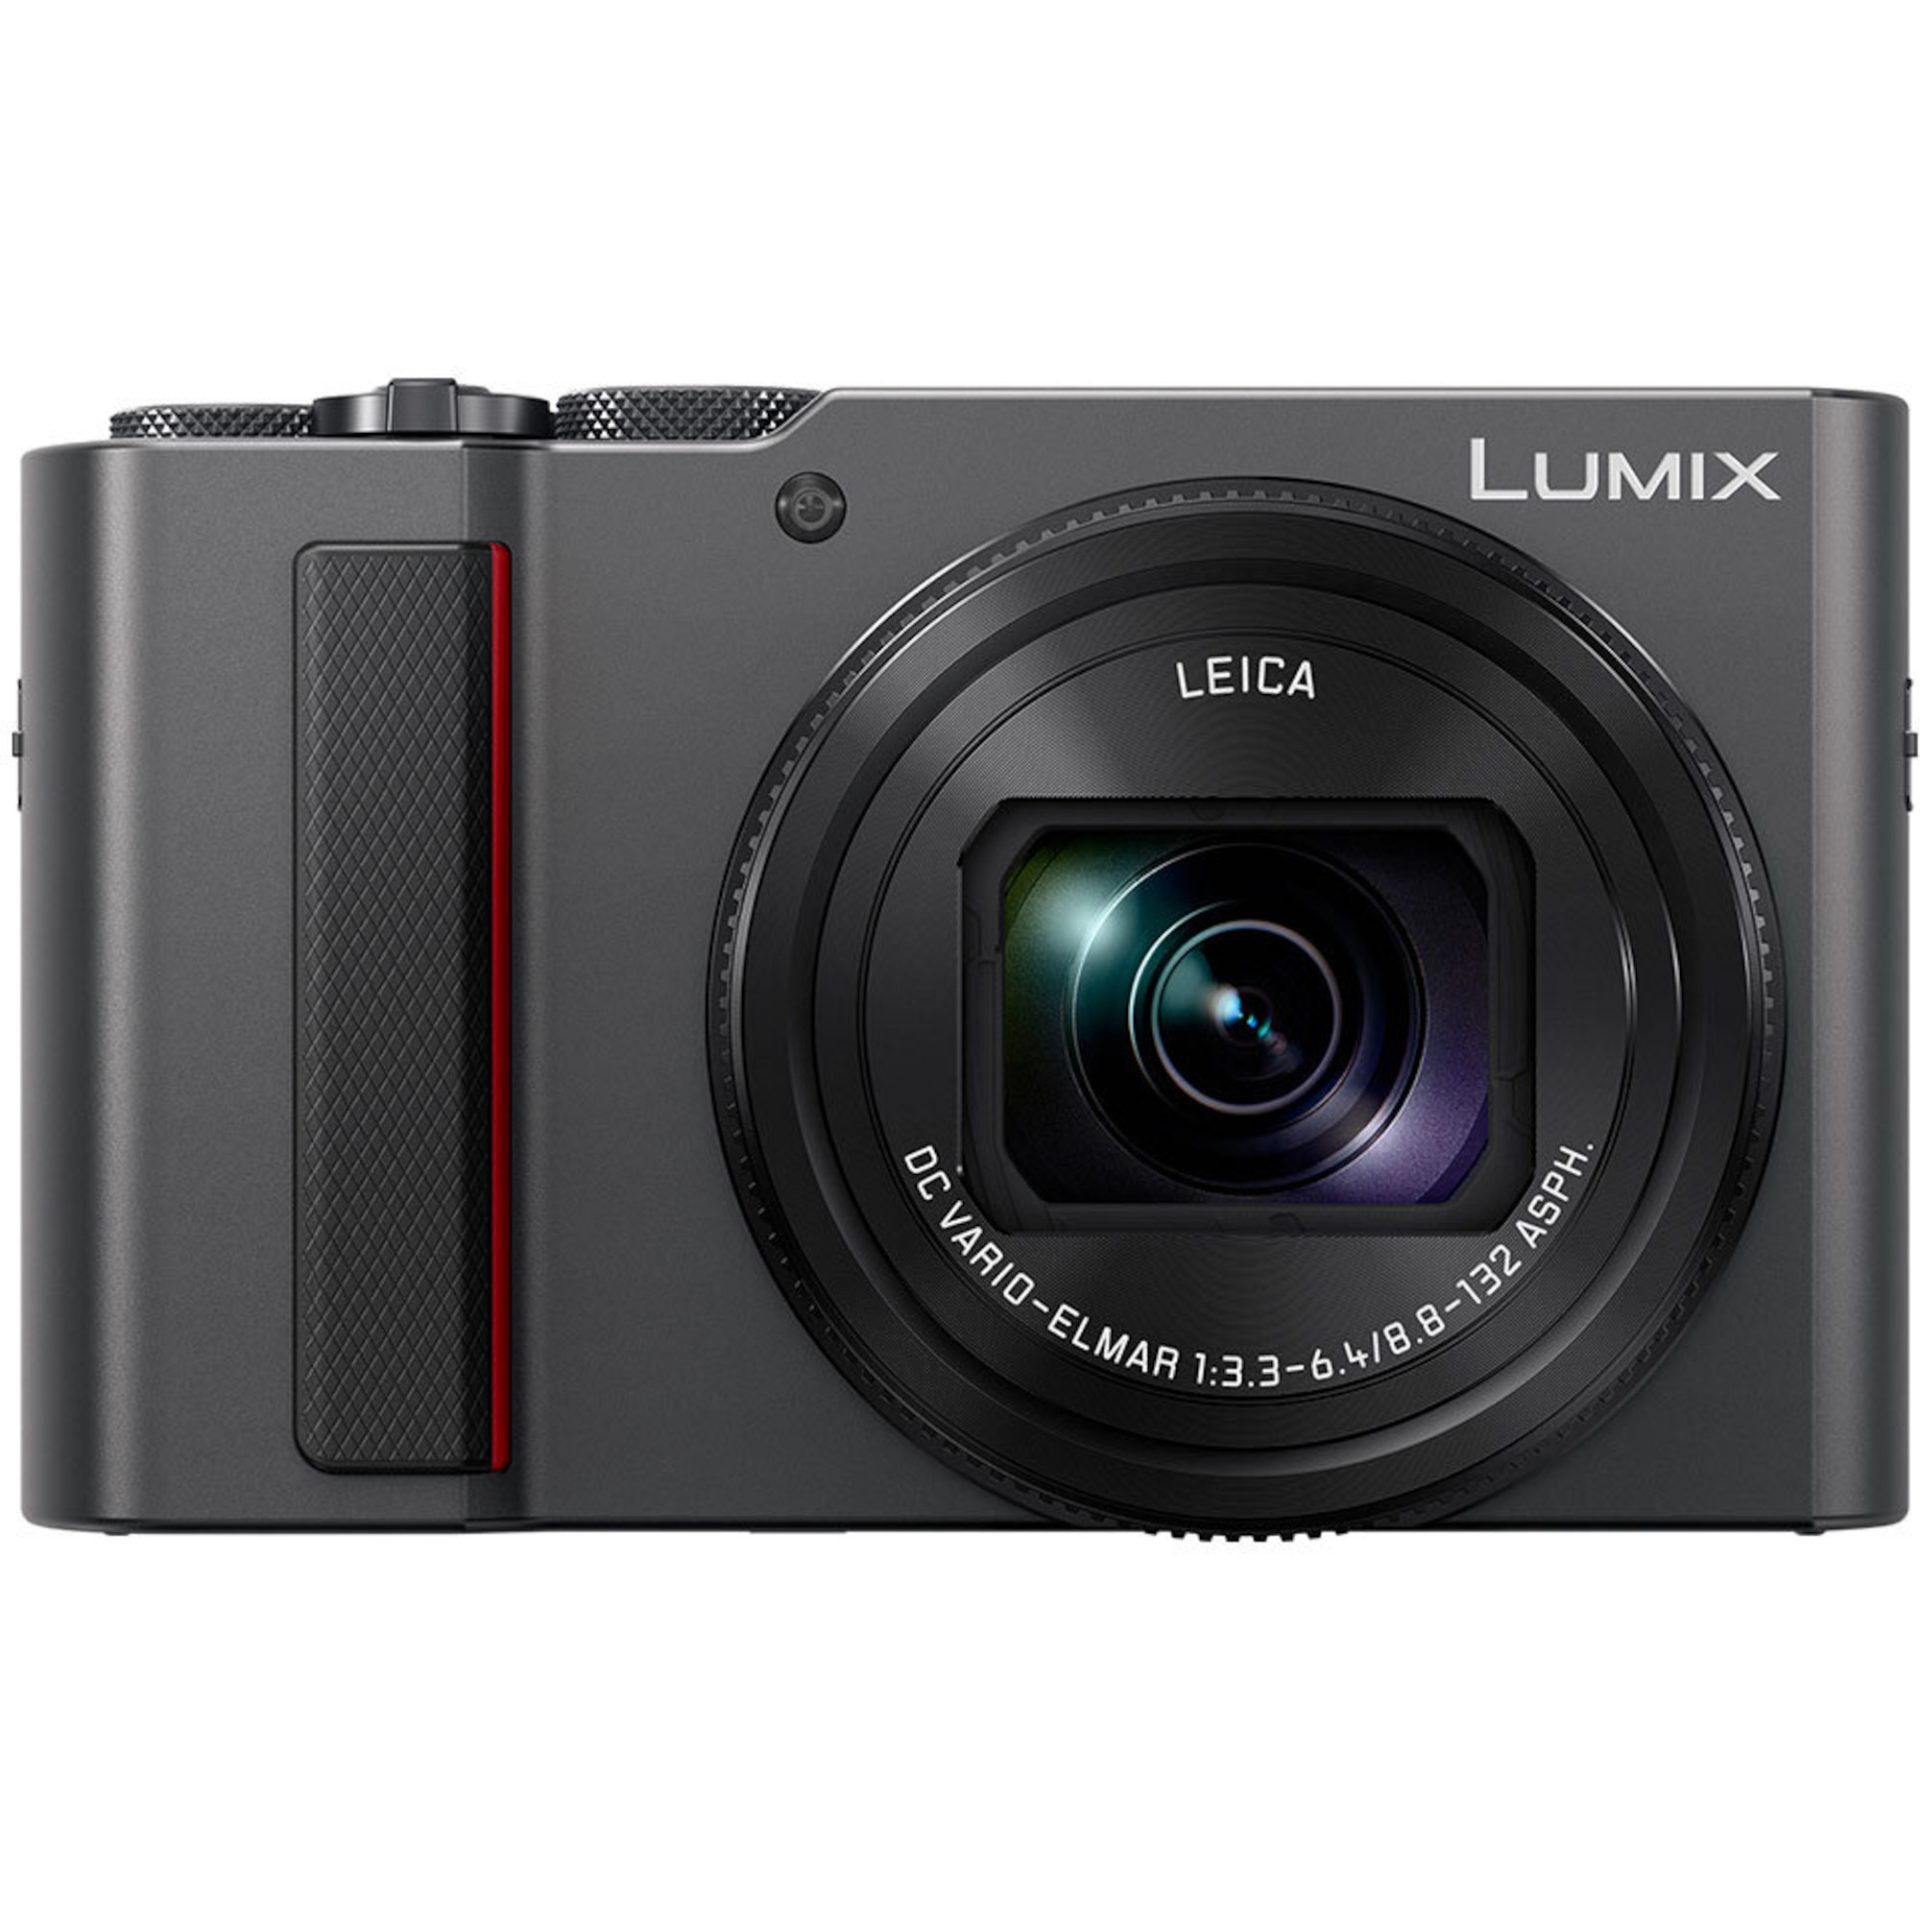 Panasonic DC-TZ200D Lumix kompaktní digitální fotoaparát (20.1MP MOS snímač, 4K 24P 30P video, Leica Zoom objektiv, 15x zoom, Wi-Fi, Post Focus), stří